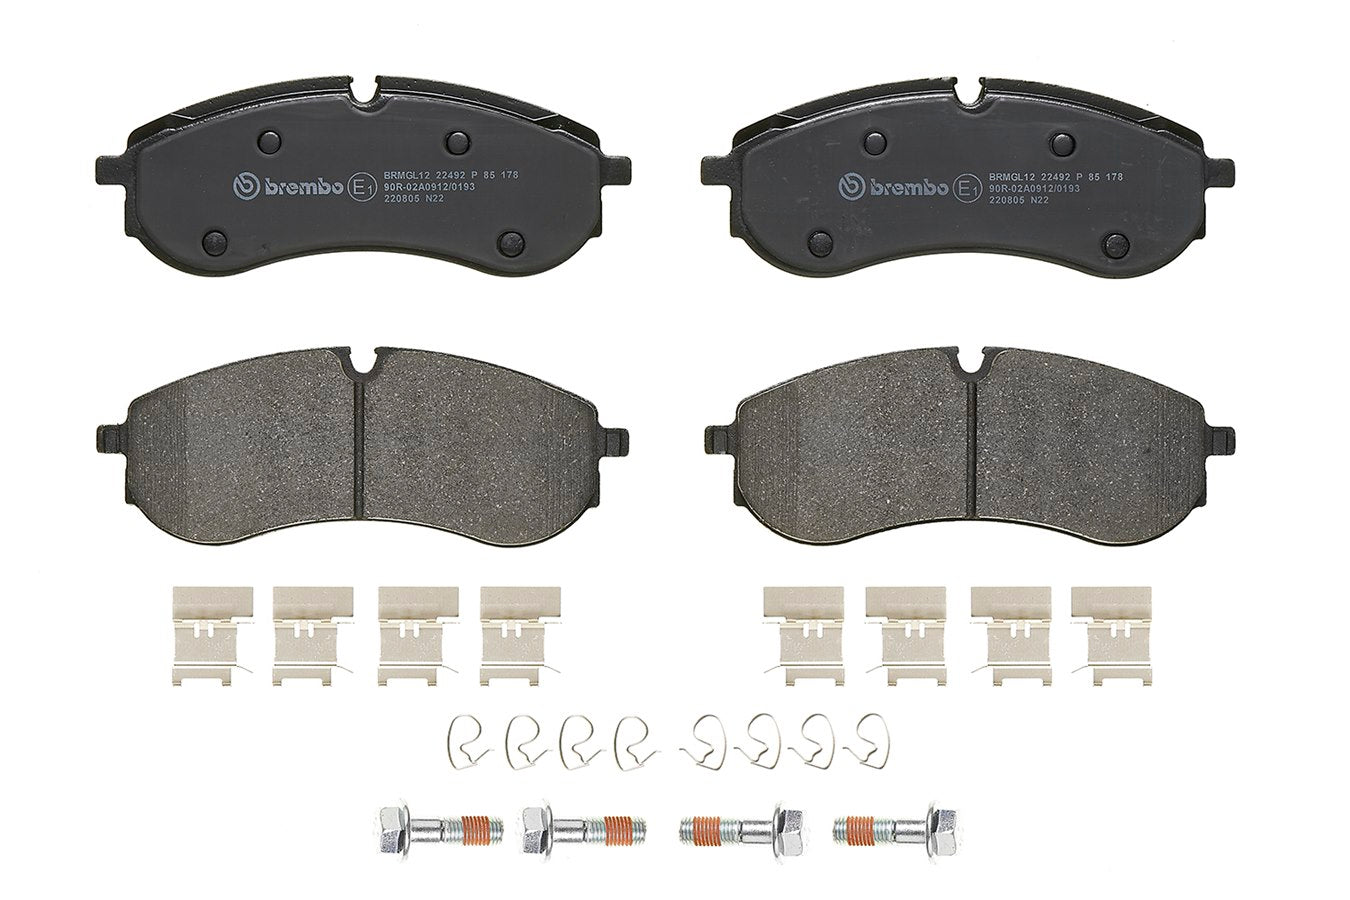 Brembo Brake Pads Rear Vw Crafter ( Set Lh&Rh) (P85178)